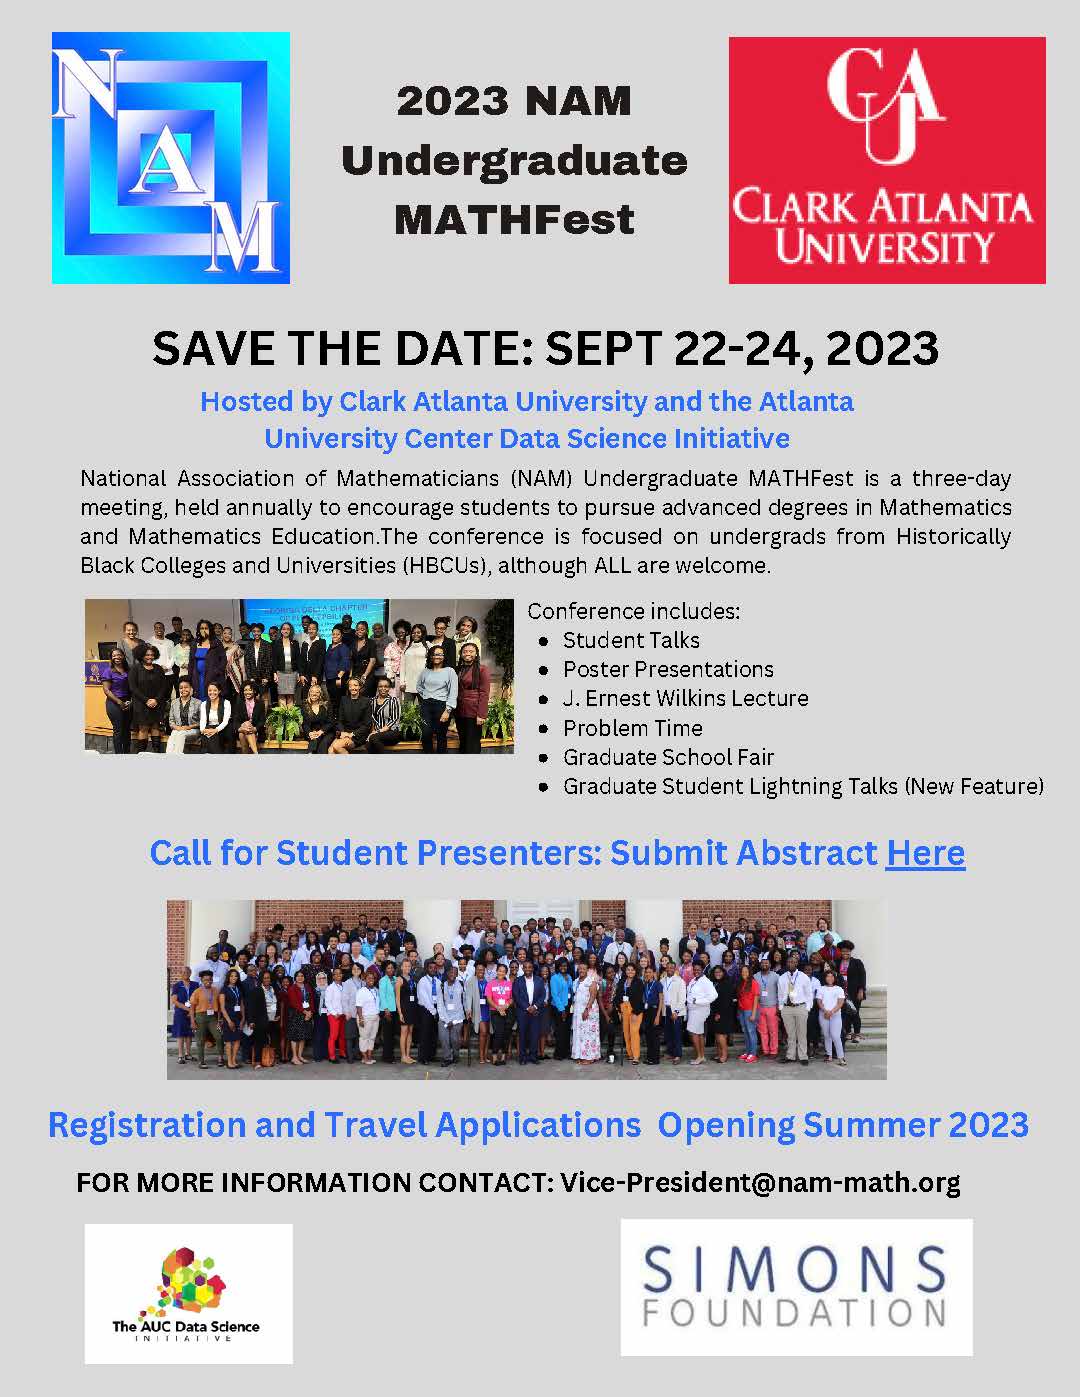 2023 National Association of Mathematicians Undergraduate MATHFest 